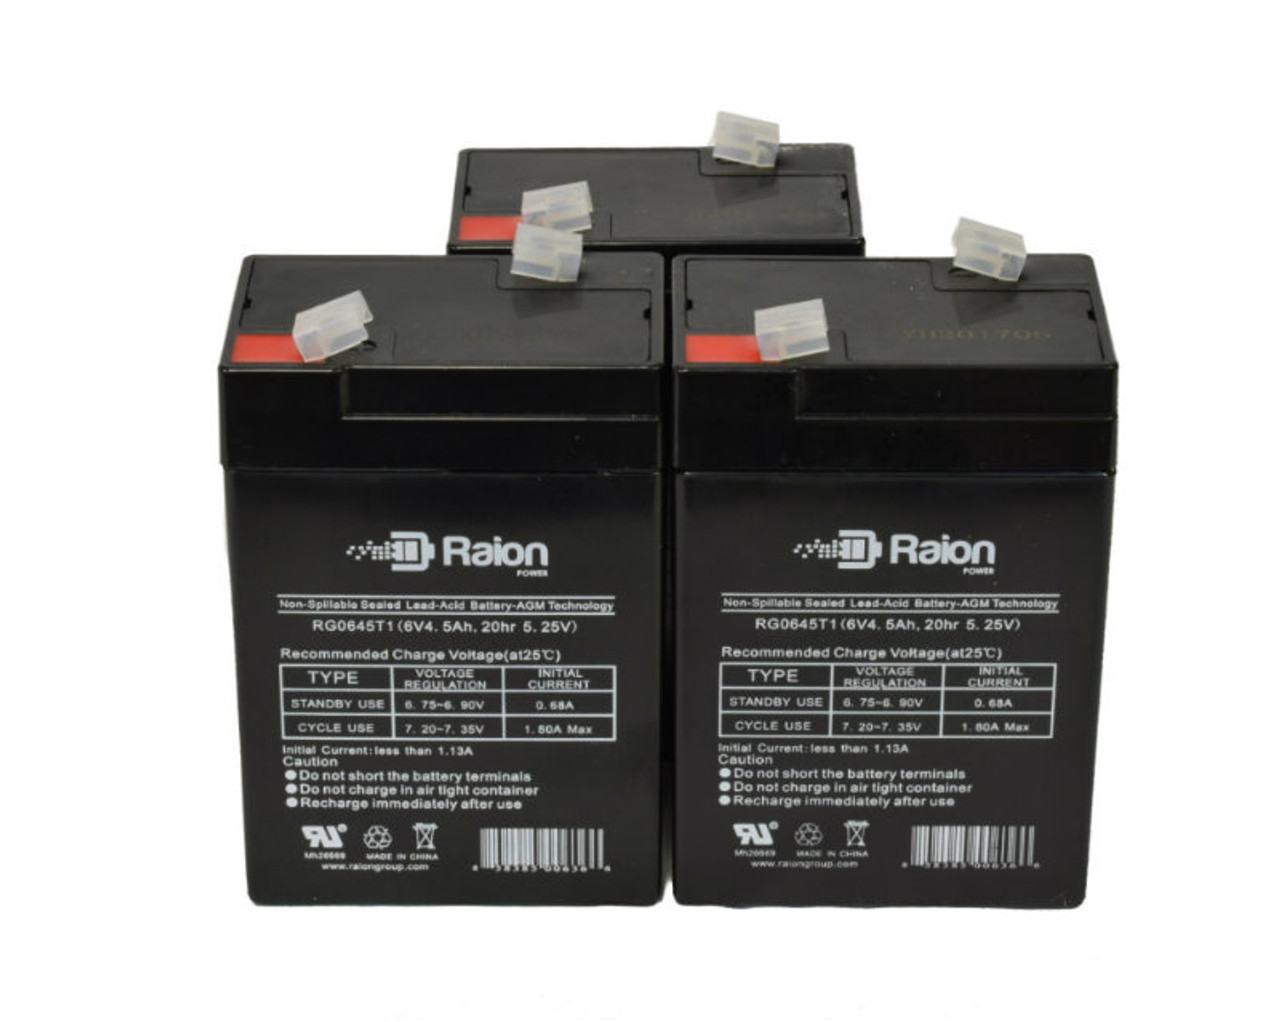 Raion Power 6V 4.5Ah Replacement Emergency Light Battery for Sonnenschein A206/3.8K - 3 Pack